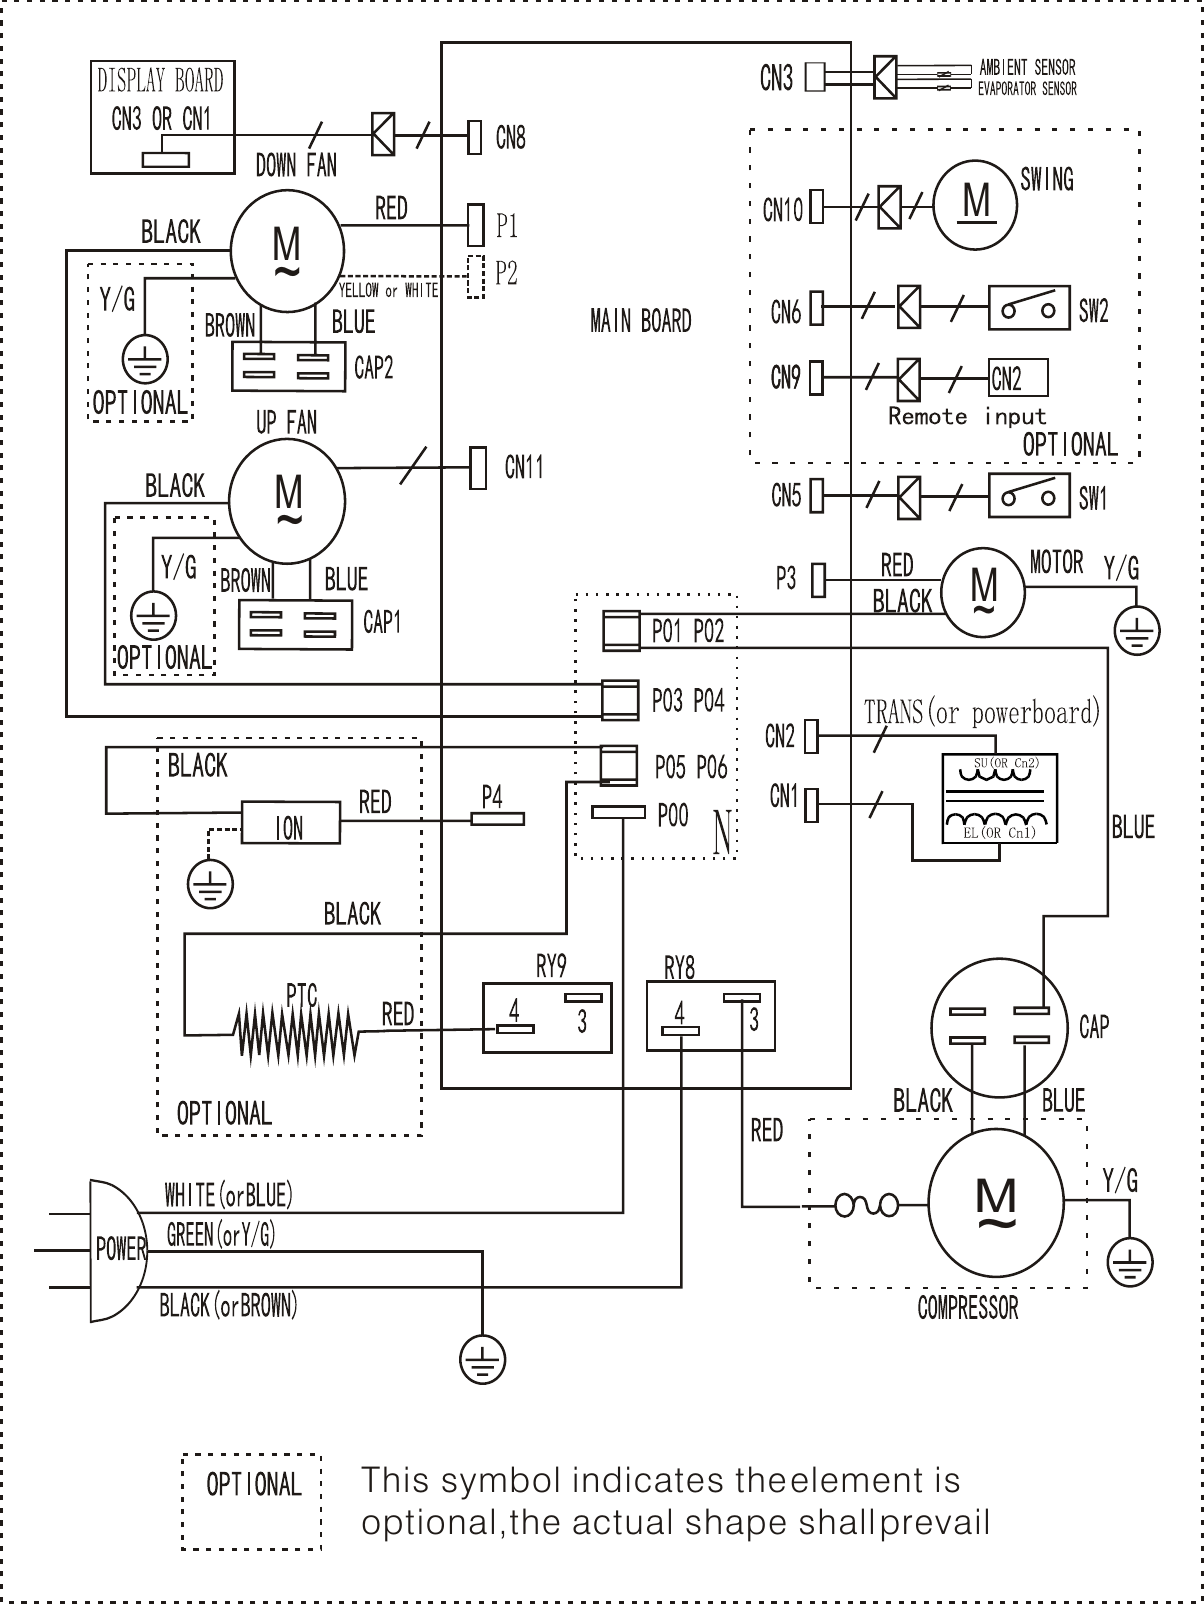 Page 1 of 1 - Frigidaire Frigidaire-Fra093Pt1-Wiring-Diagram- US-KC35Y1$N1-N1(I6H).D.06.MP-1  Frigidaire-fra093pt1-wiring-diagram